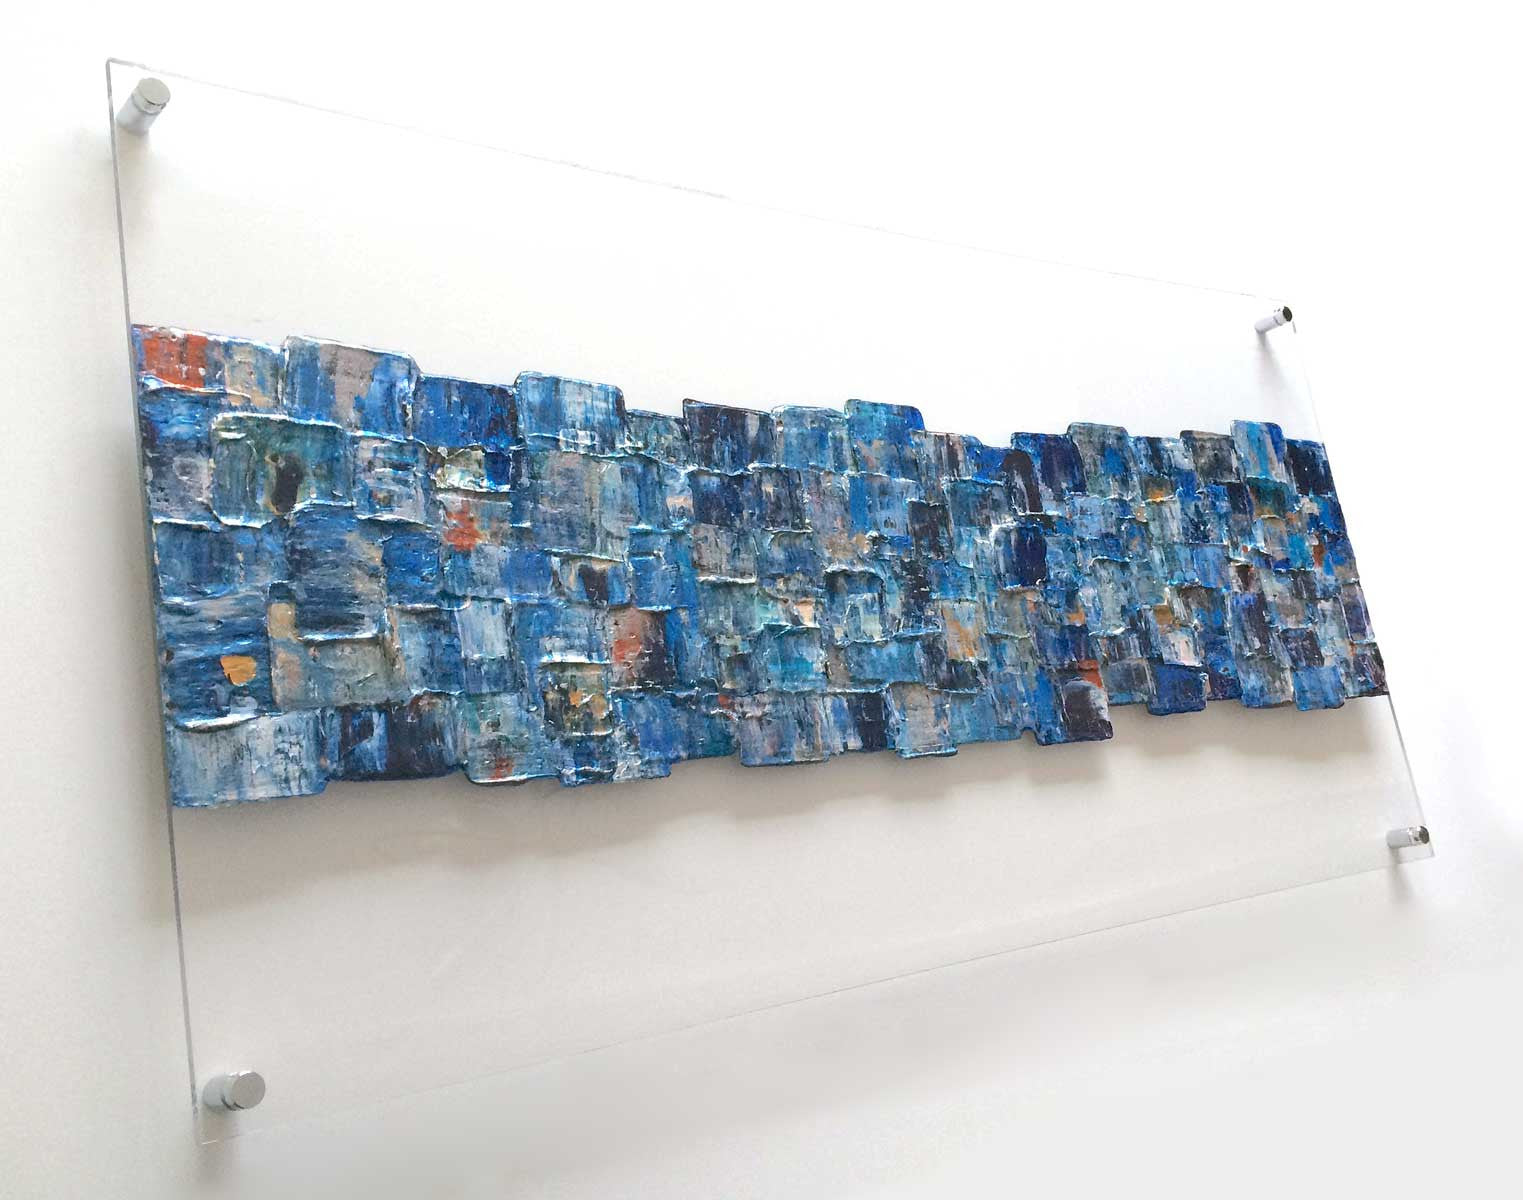 'Interwoven Blue' painting on clear plexiglass